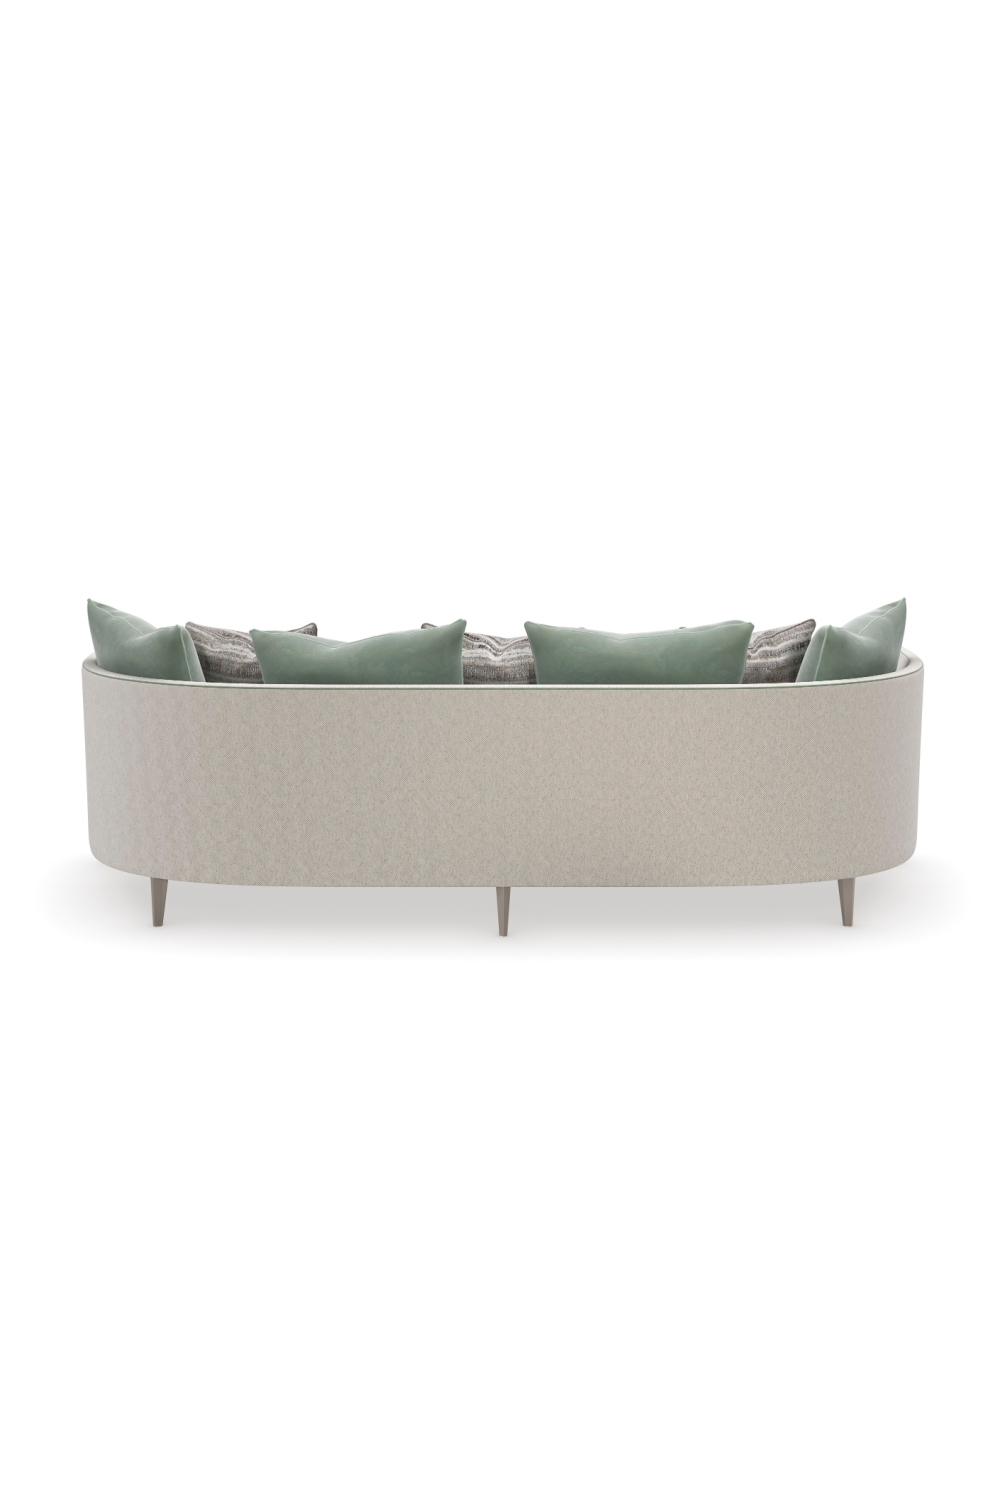 Contemporary Gray Sofa | Caracole Piping Hot | Oroa.com